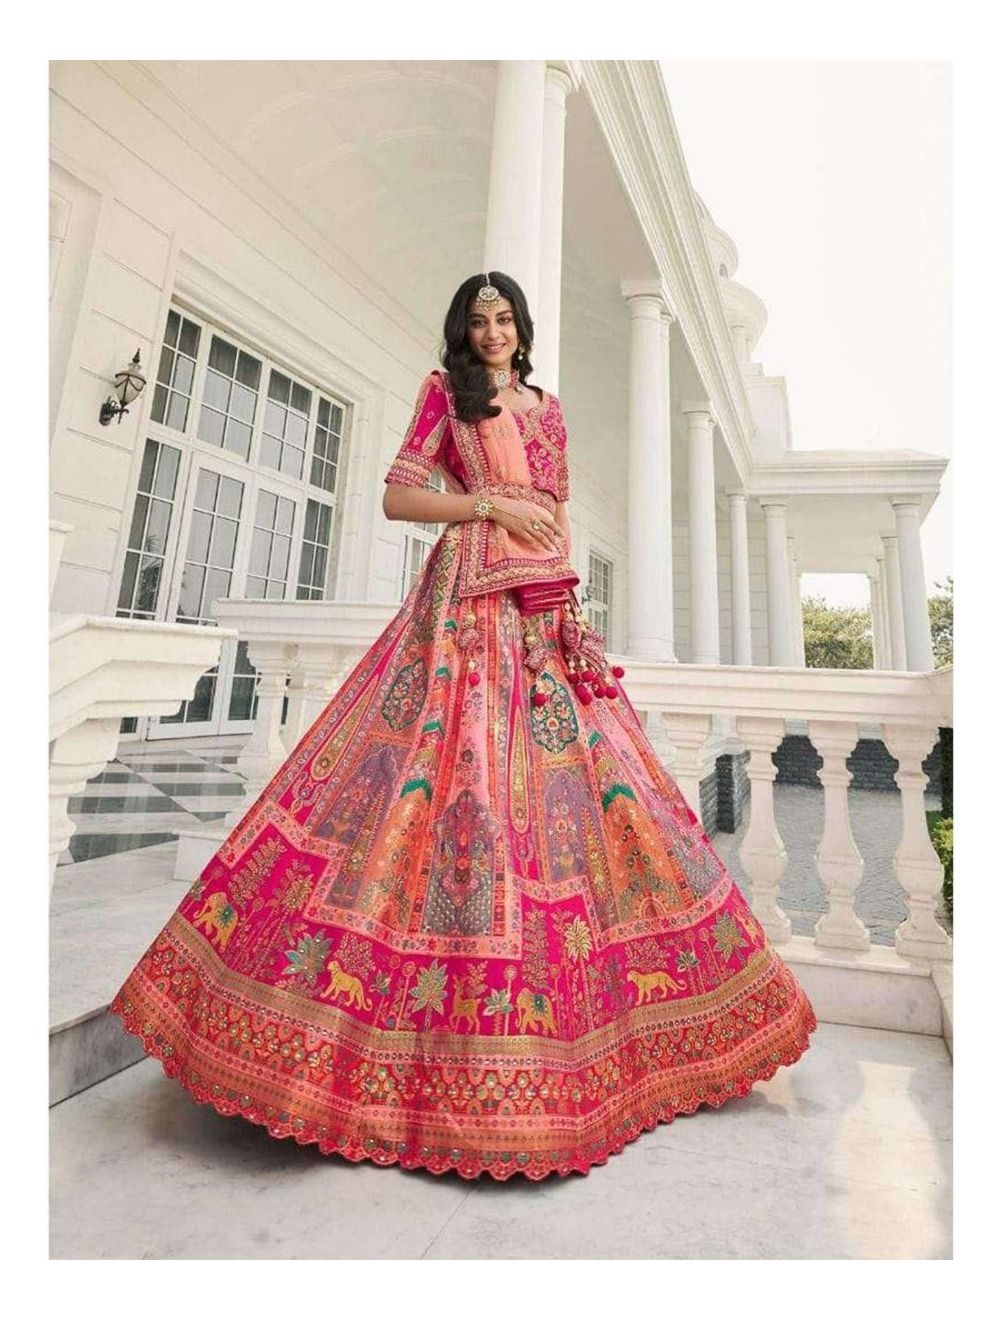 10 Best Stores In Chandni Chowk For Bridal Lehenga Shopping | Bridal  lehenga shopping, Latest bridal dresses, Bridal lehenga